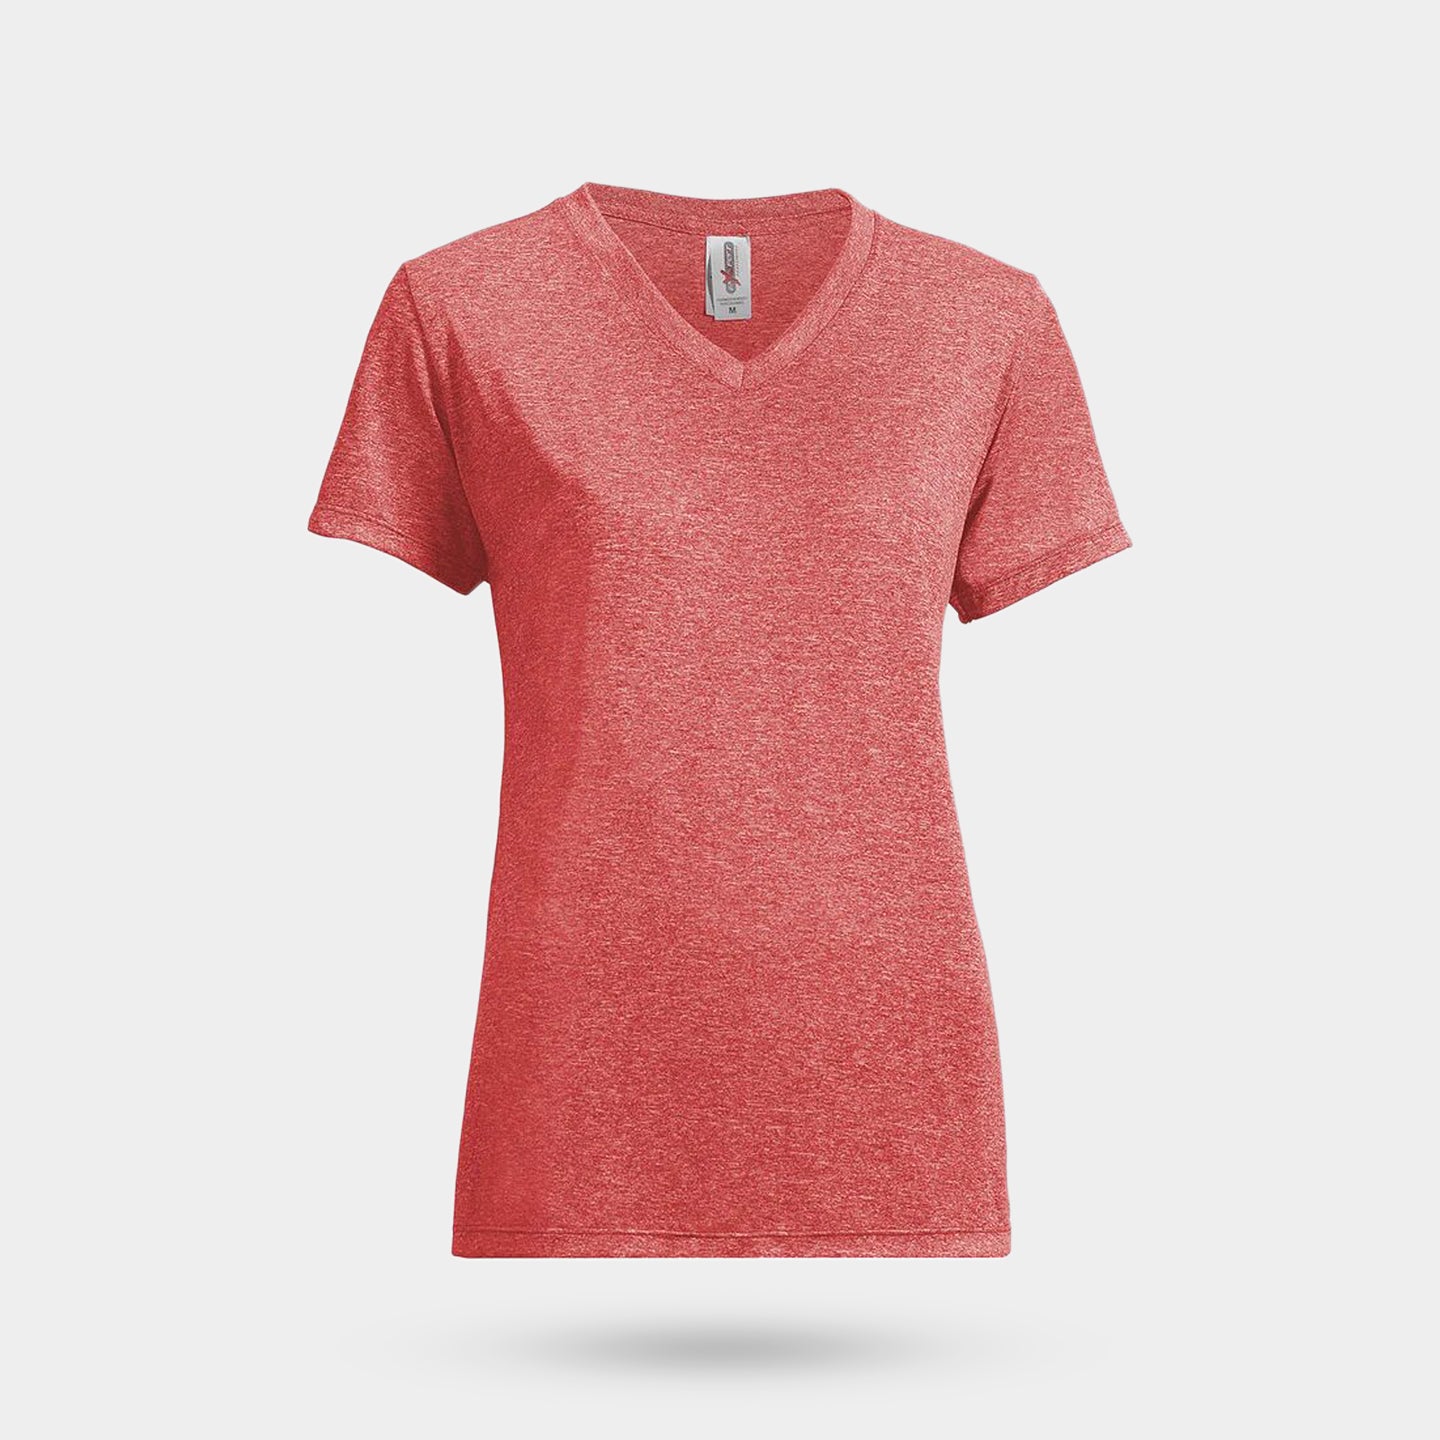 Expert Brand Women's Heather Natural Feel Performance T-Shirt, XL, Heather Red A1